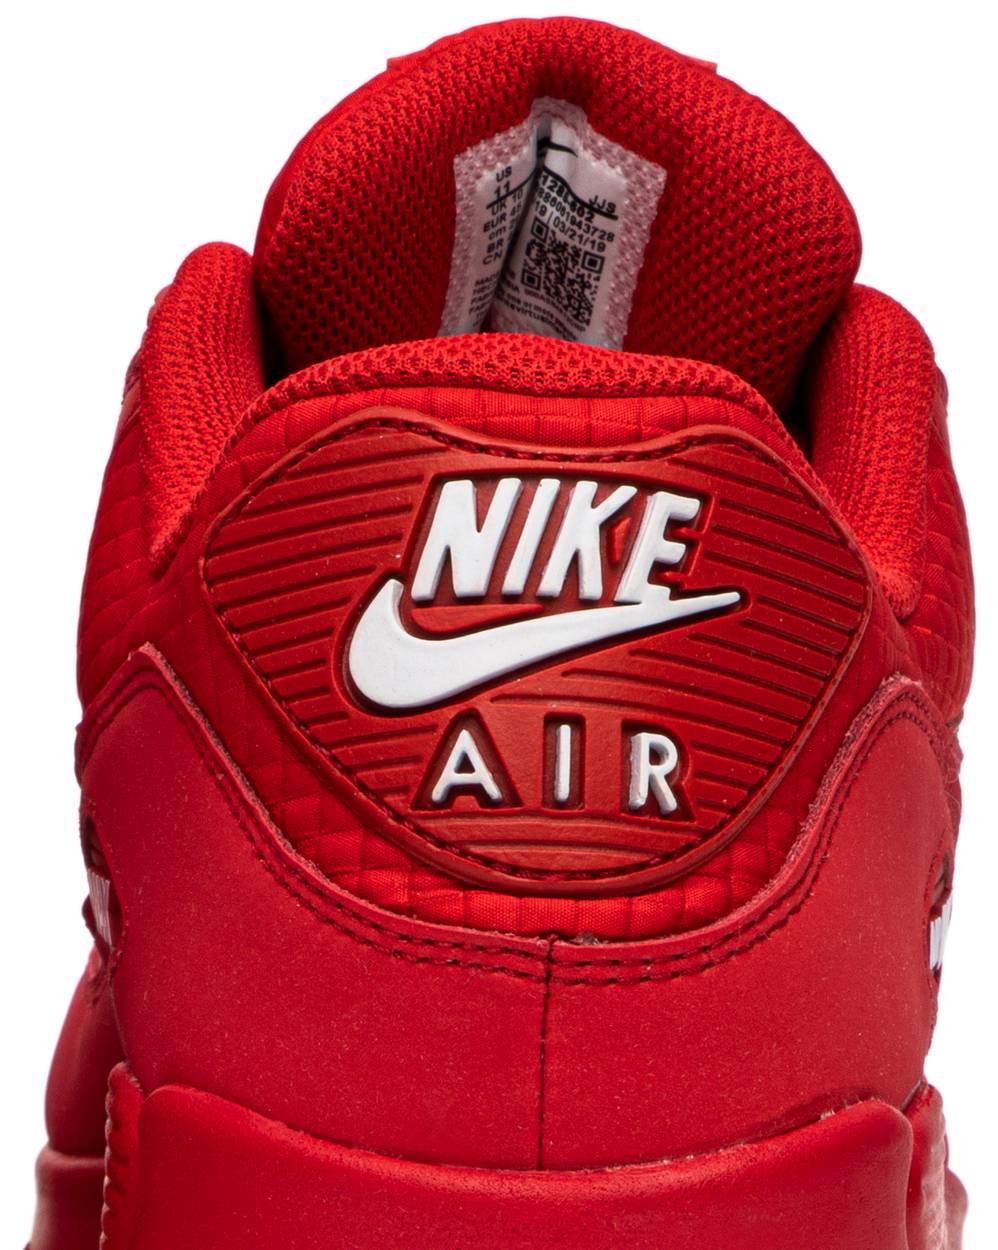 Air Max 90 Essential 'University Red' - Nike - AJ1285 602 | GOAT